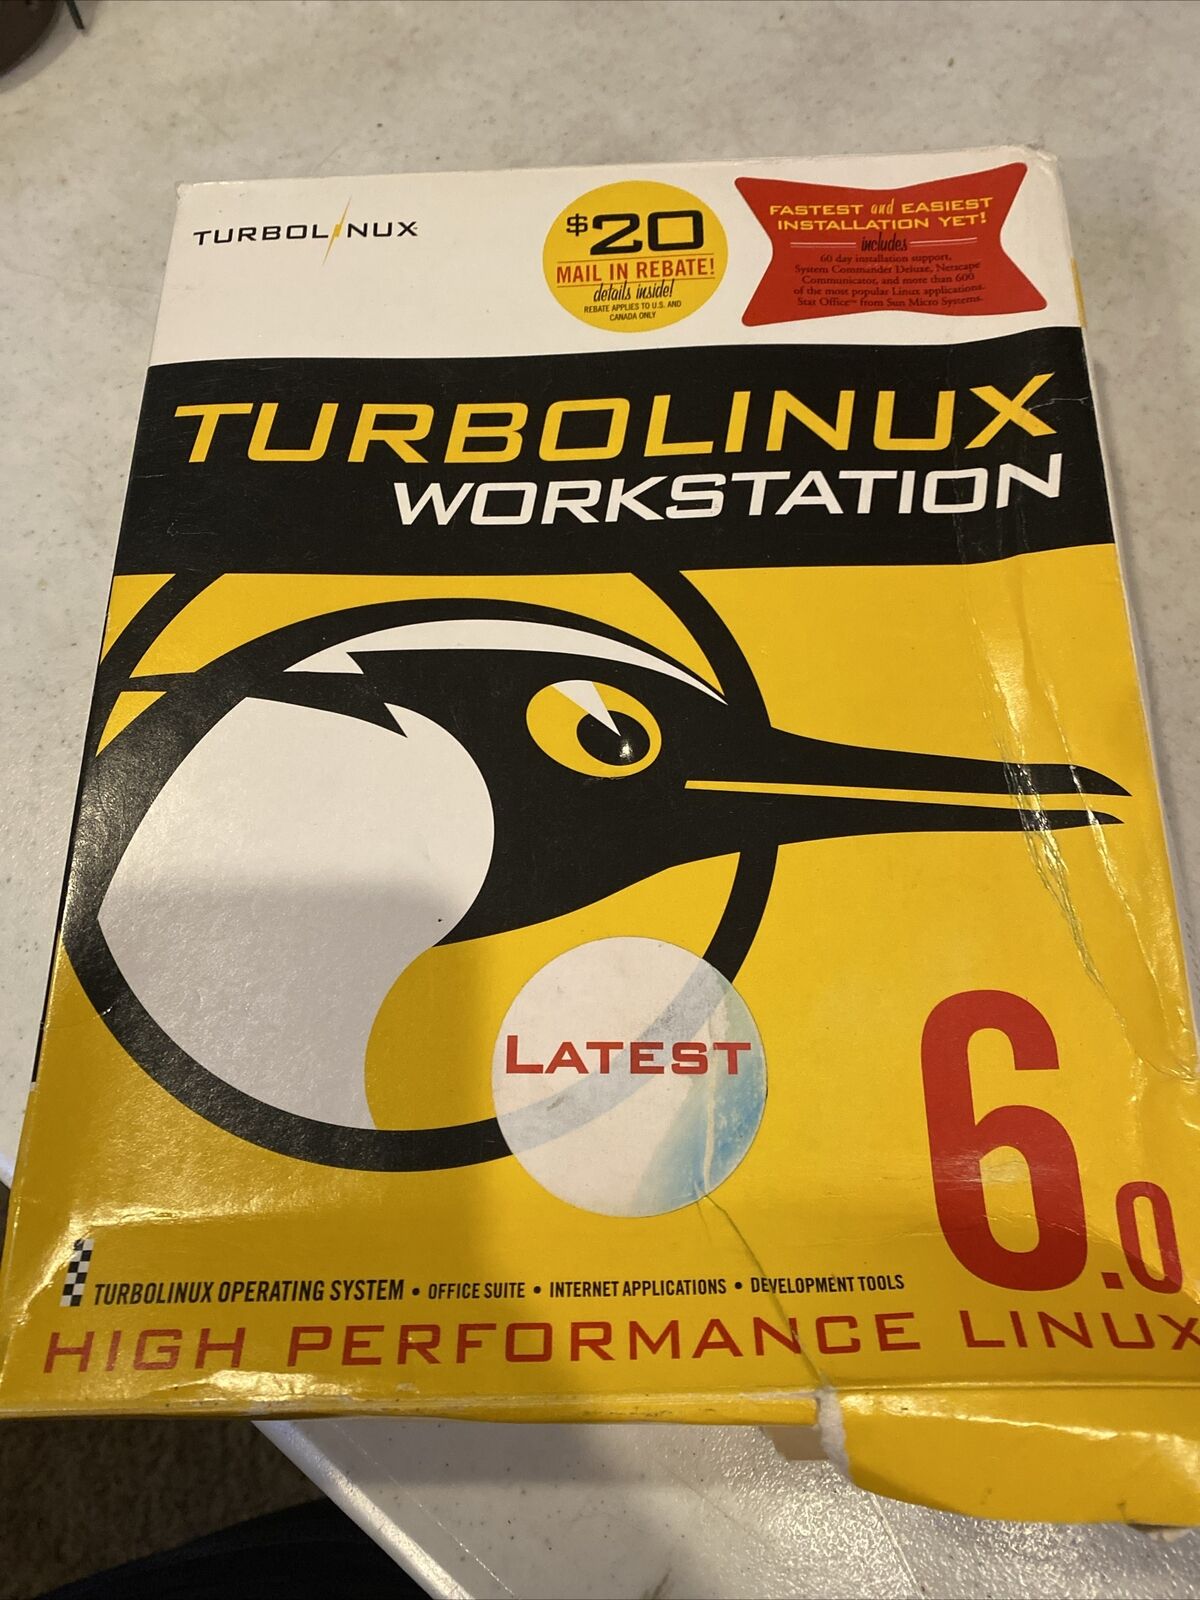 Turbo Linux 6.0 Workstation Operating System Copyright 2000